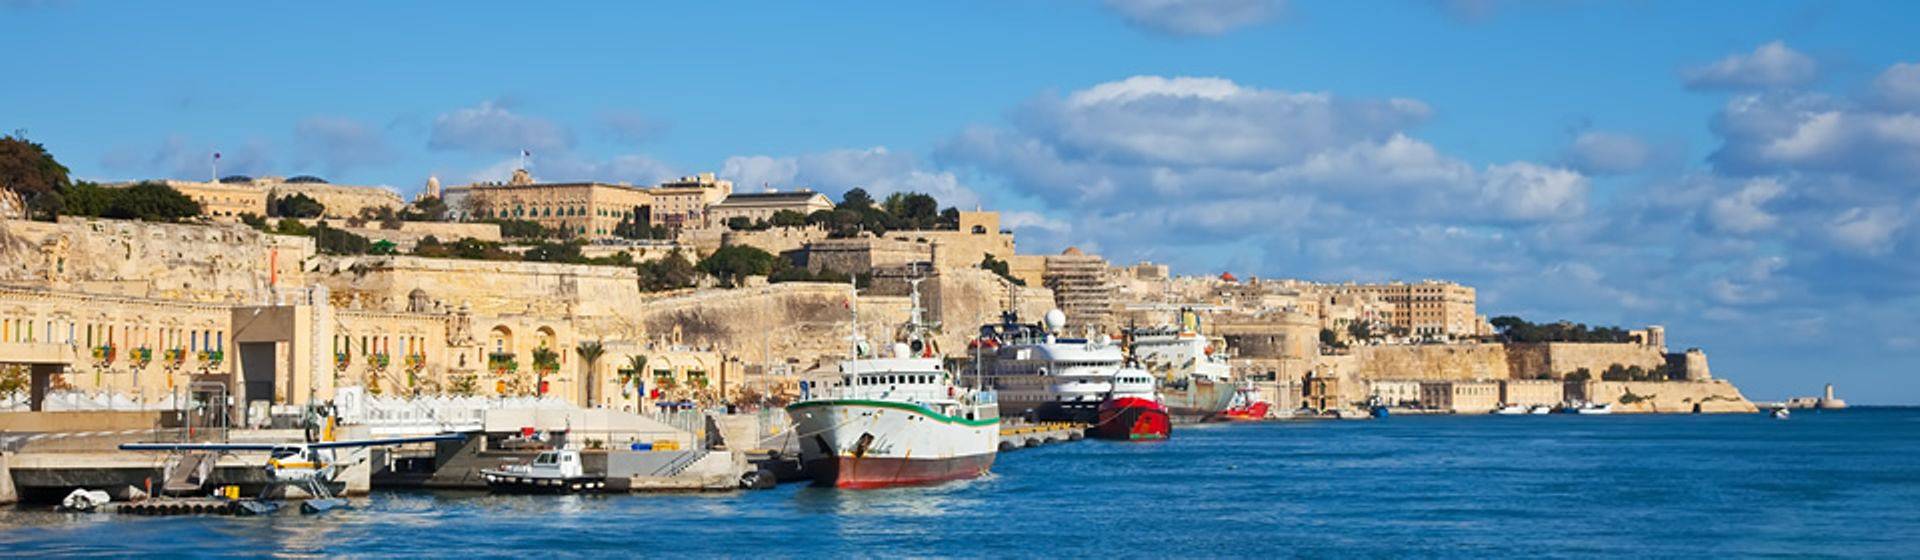 Holidays to Valletta Image